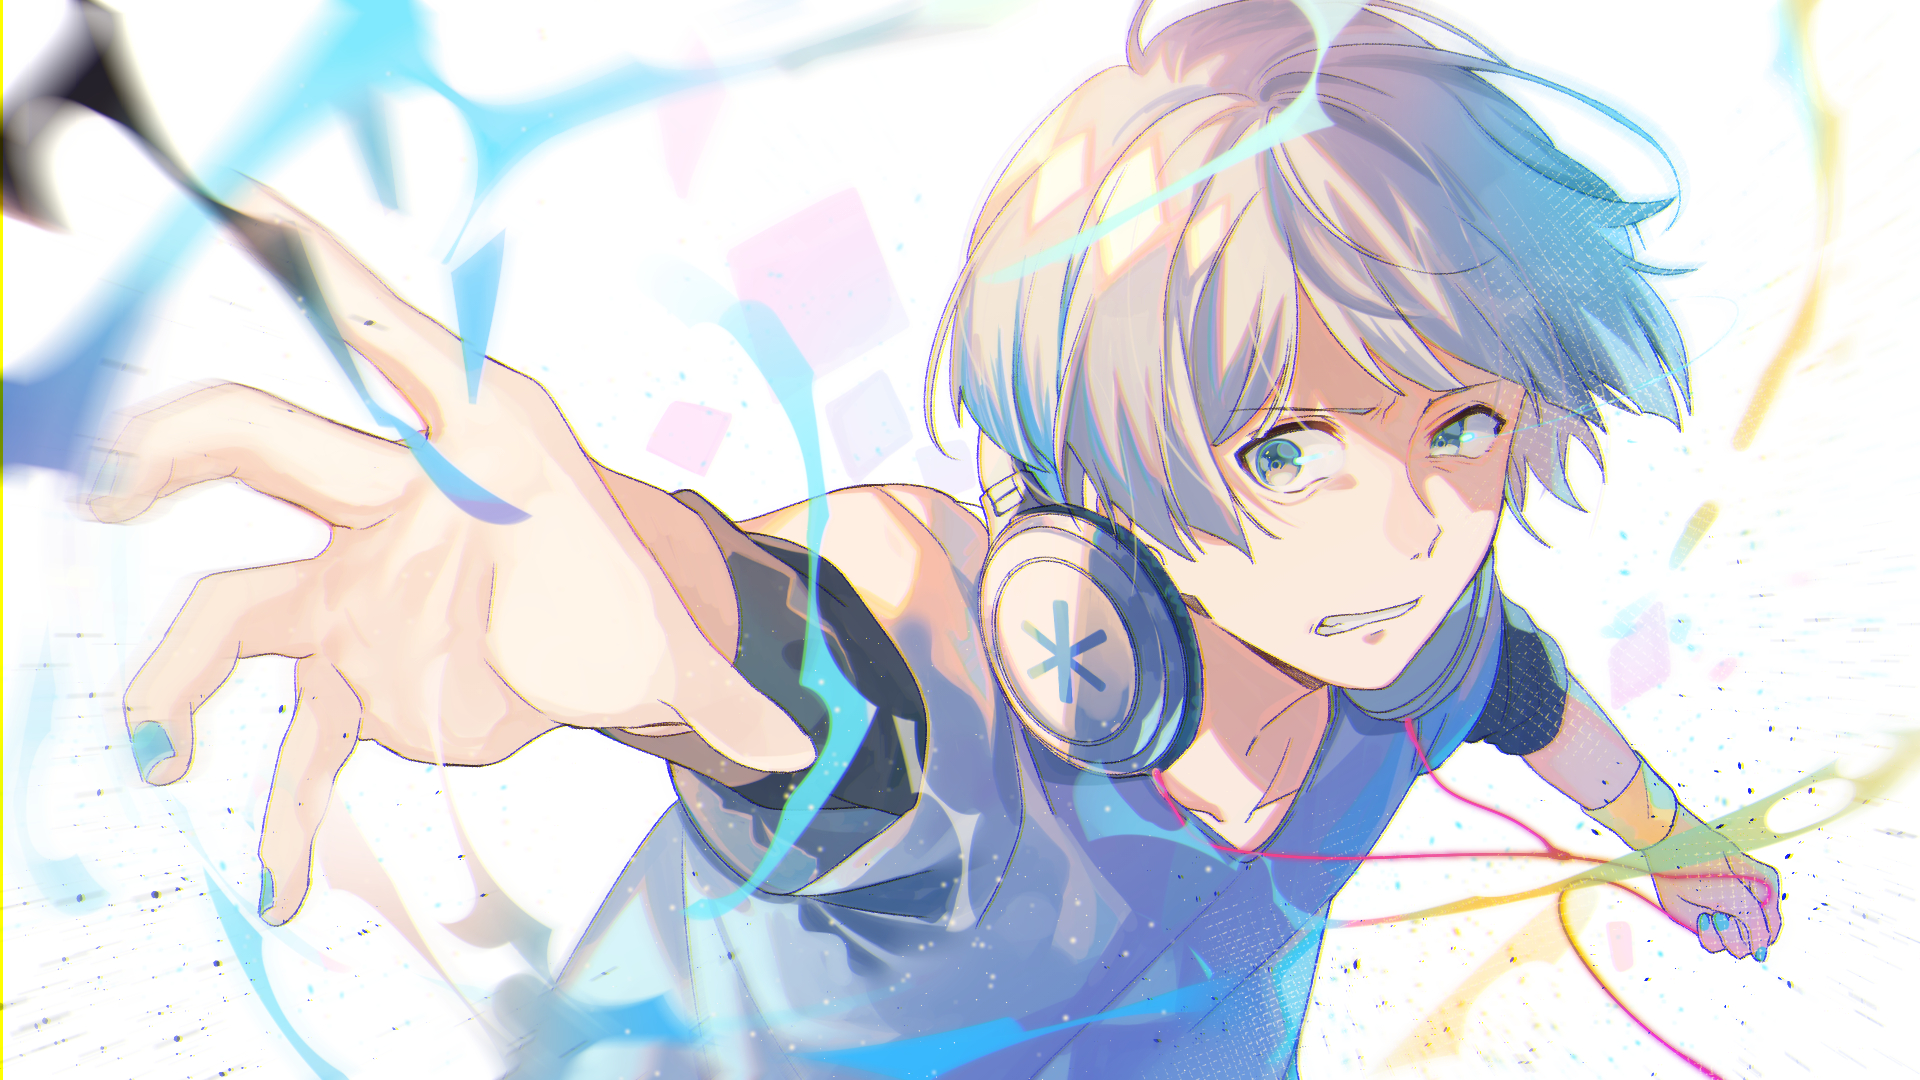 anime boy with headphones drawing